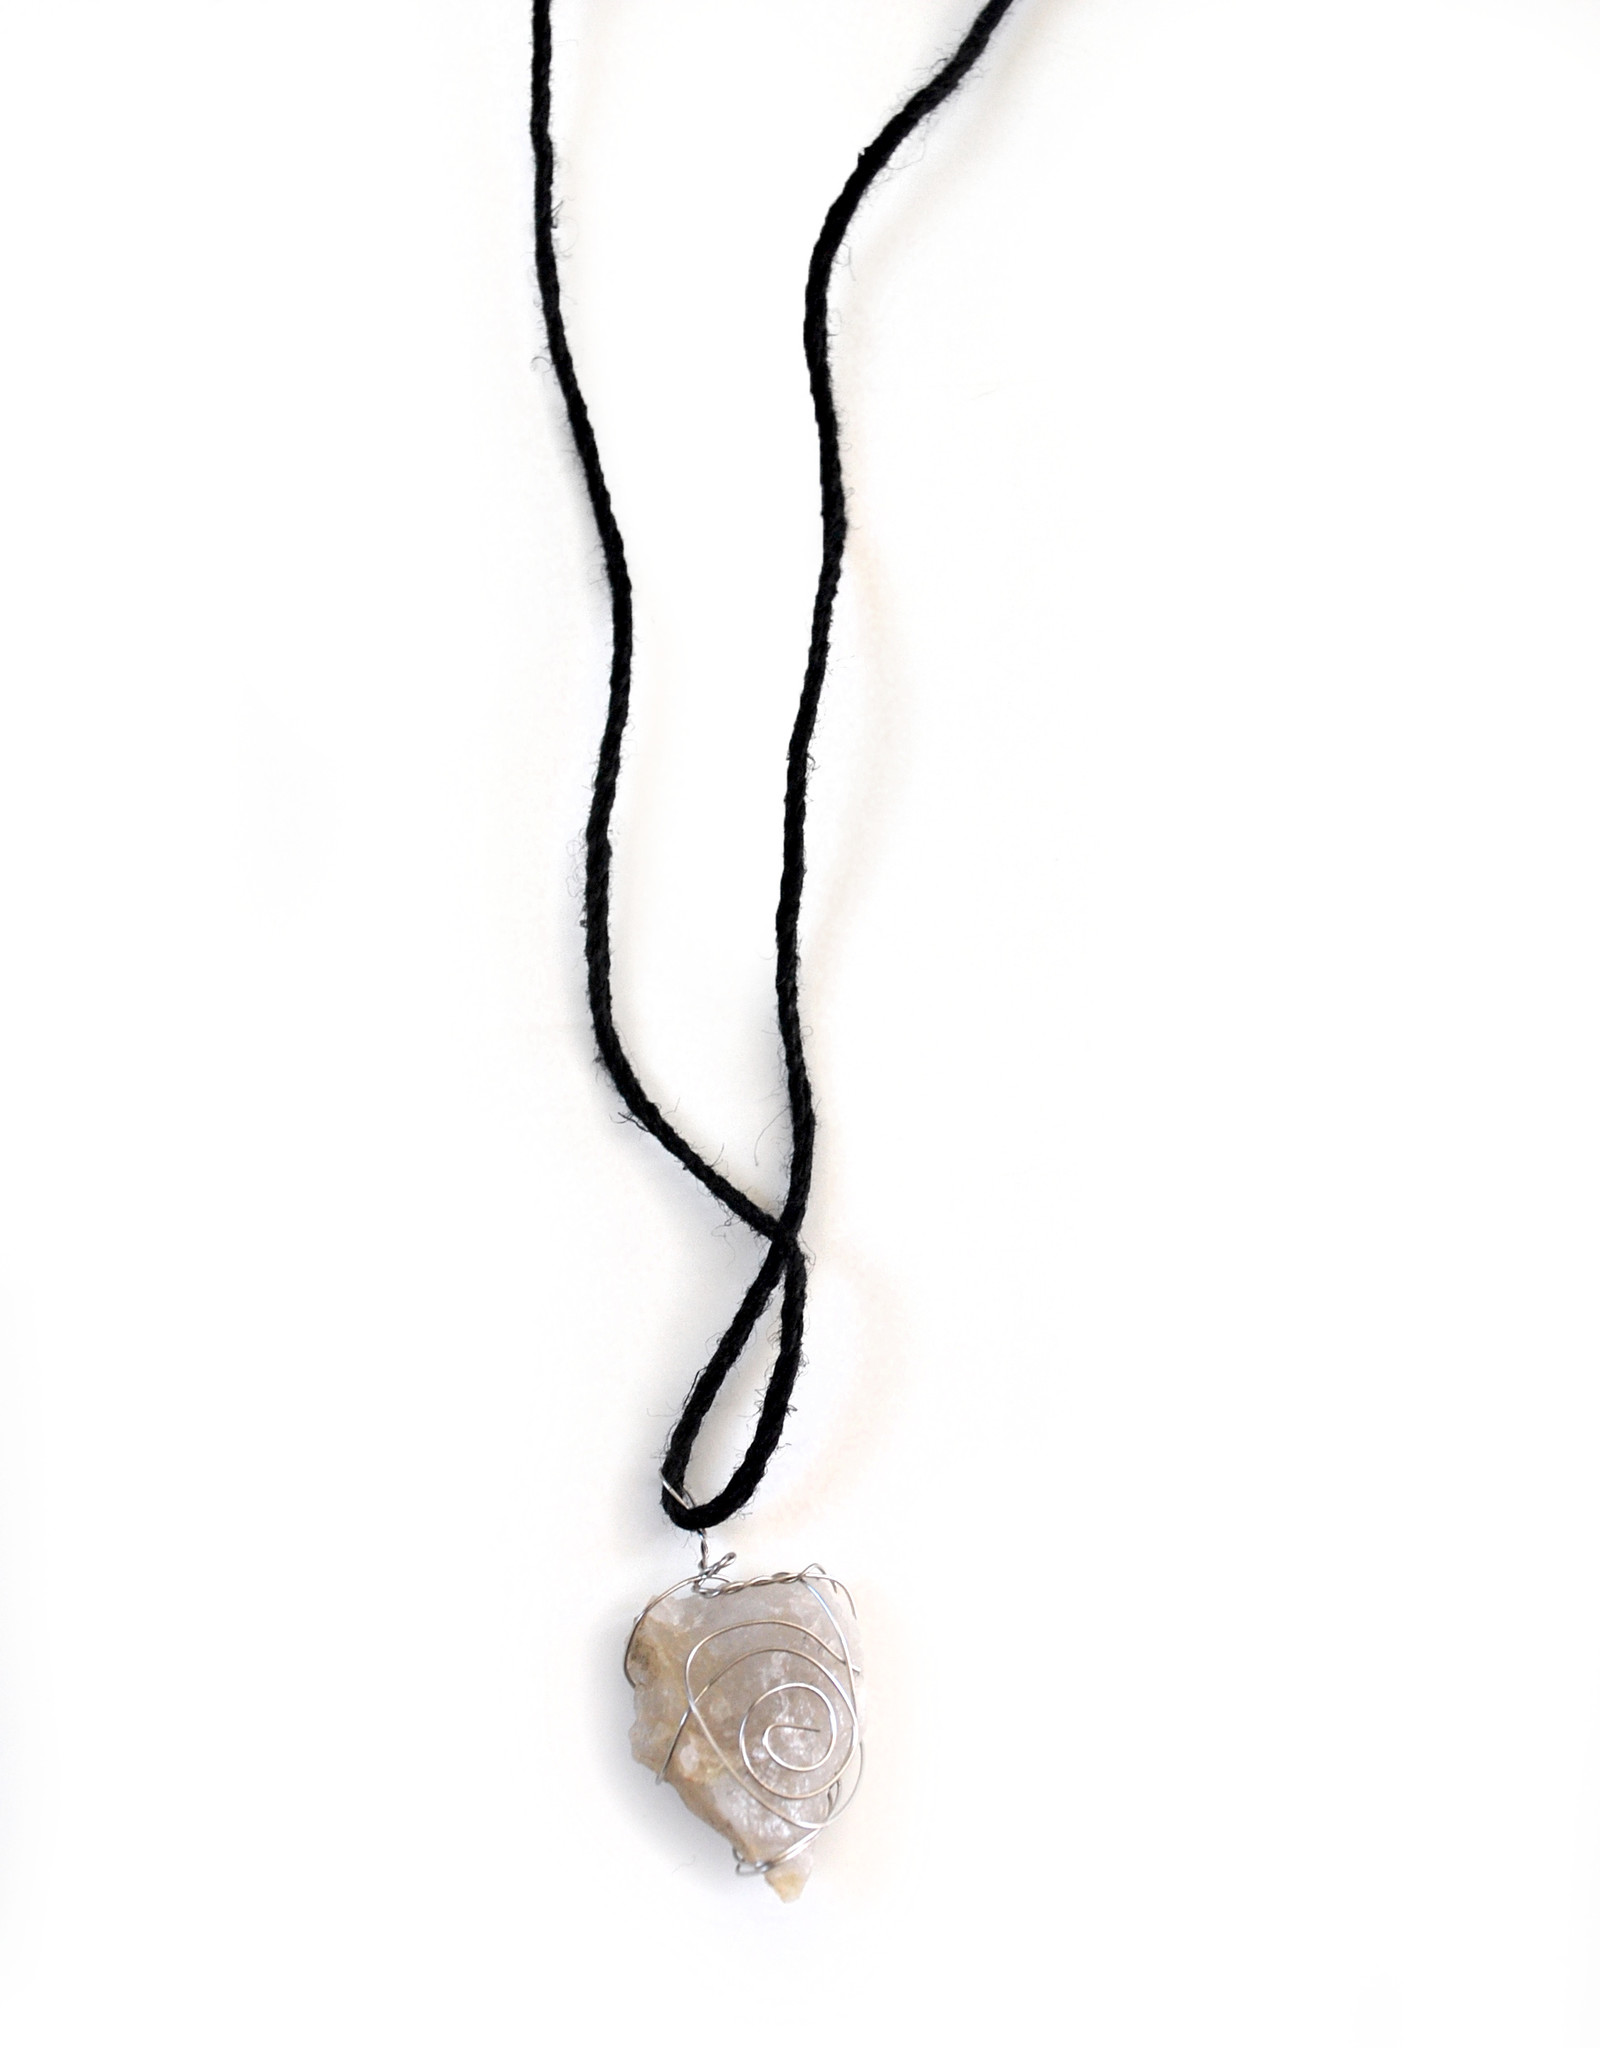 Clear Quartz Necklace by Mikey Tardy